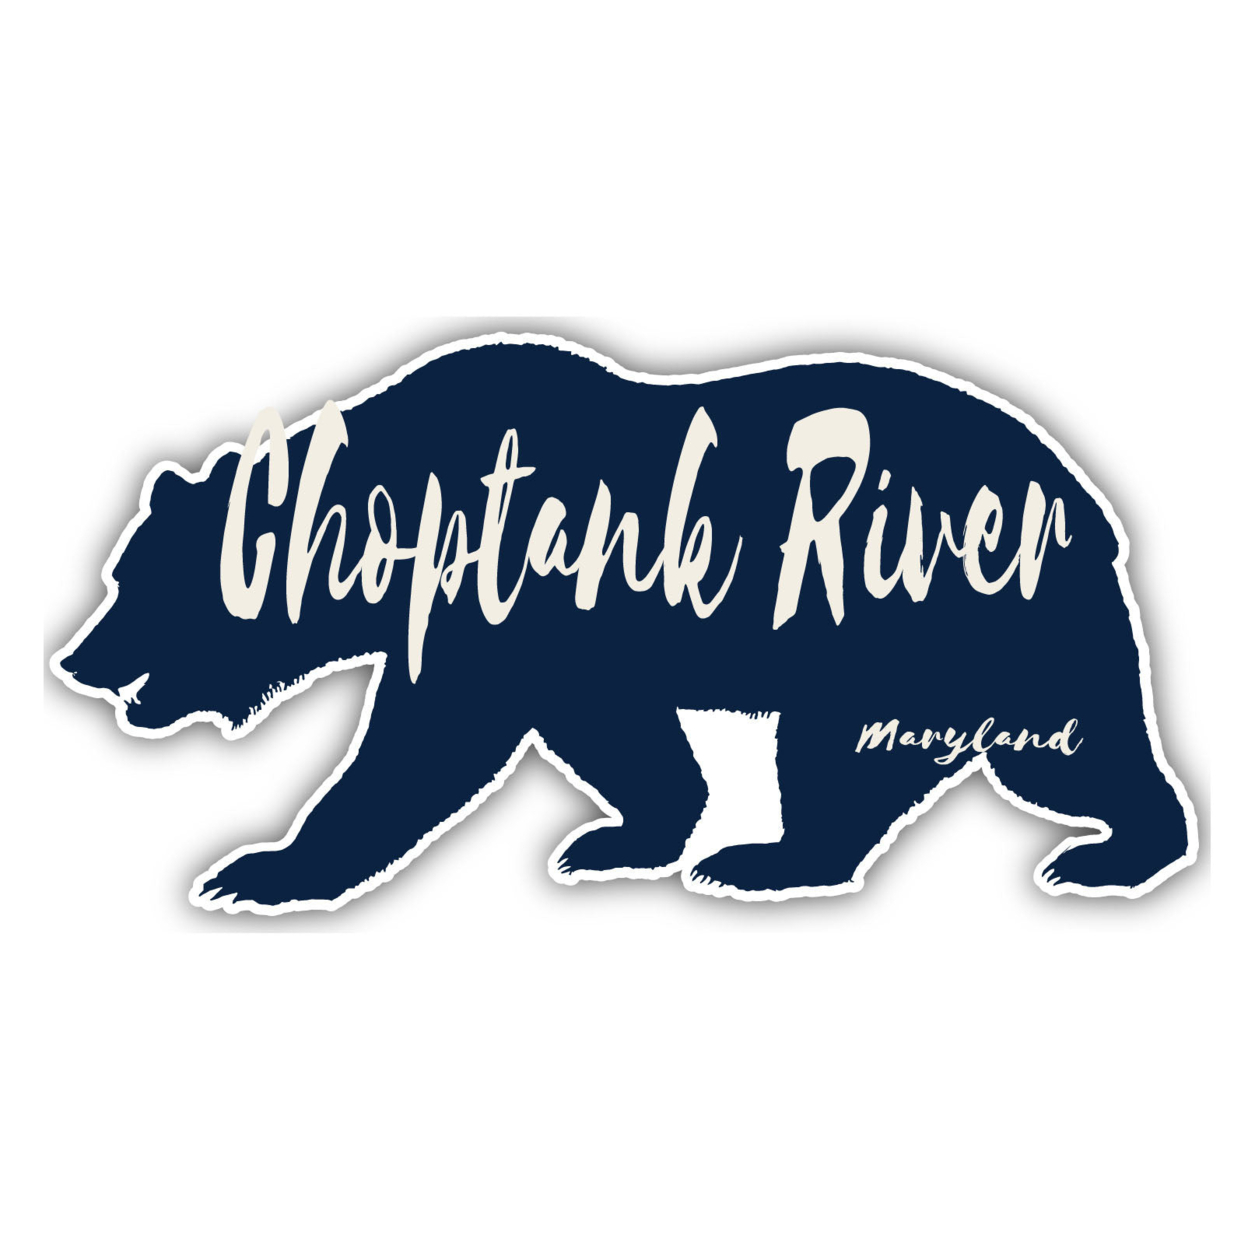 Choptank River Maryland Souvenir Decorative Stickers (Choose Theme And Size) - Single Unit, 2-Inch, Bear